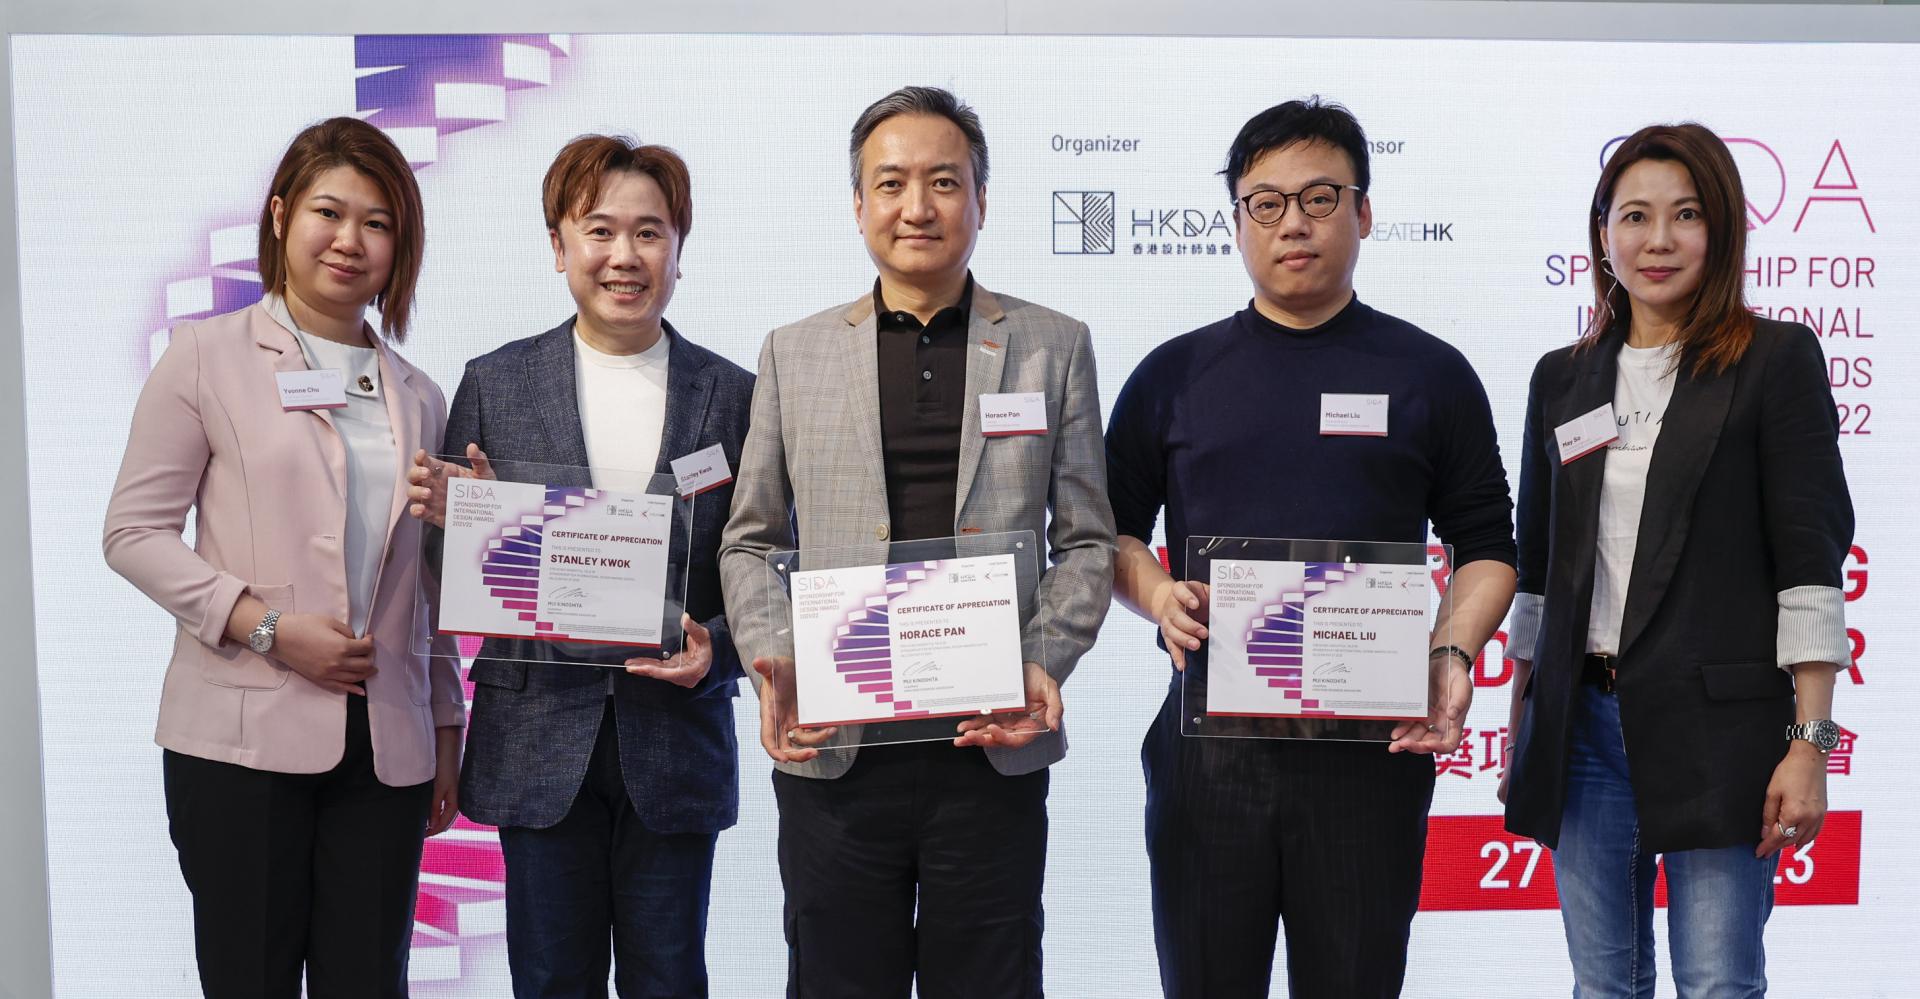 Empowering Hong Kong Designers Globally: The Sponsorship for International Design Awards